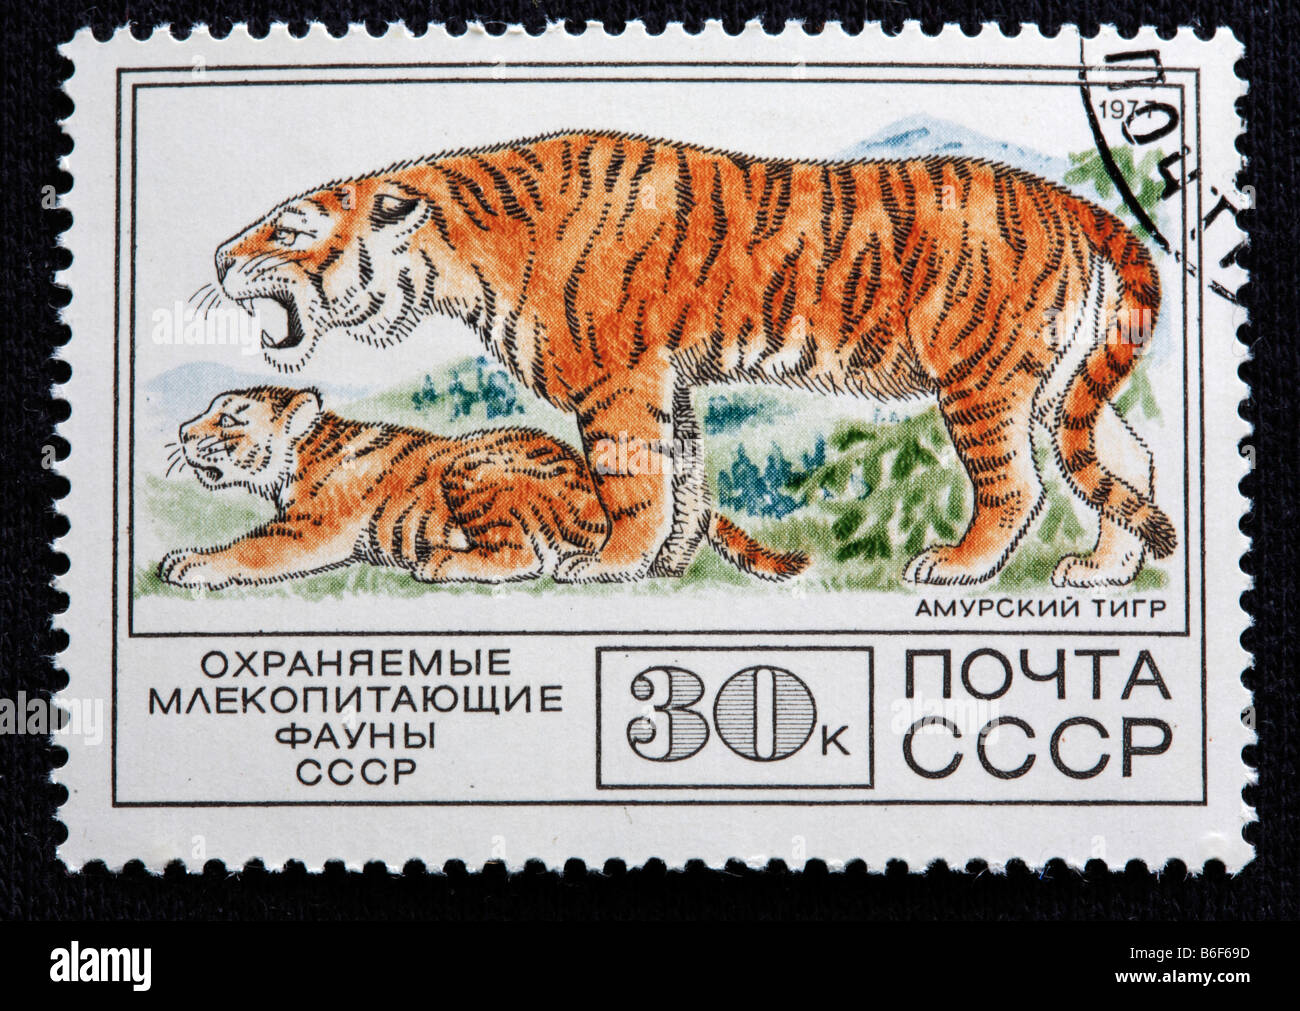 Amur Tiger (Panthera tigris altaica), postage stamp, USSR, 1977 Stock Photo